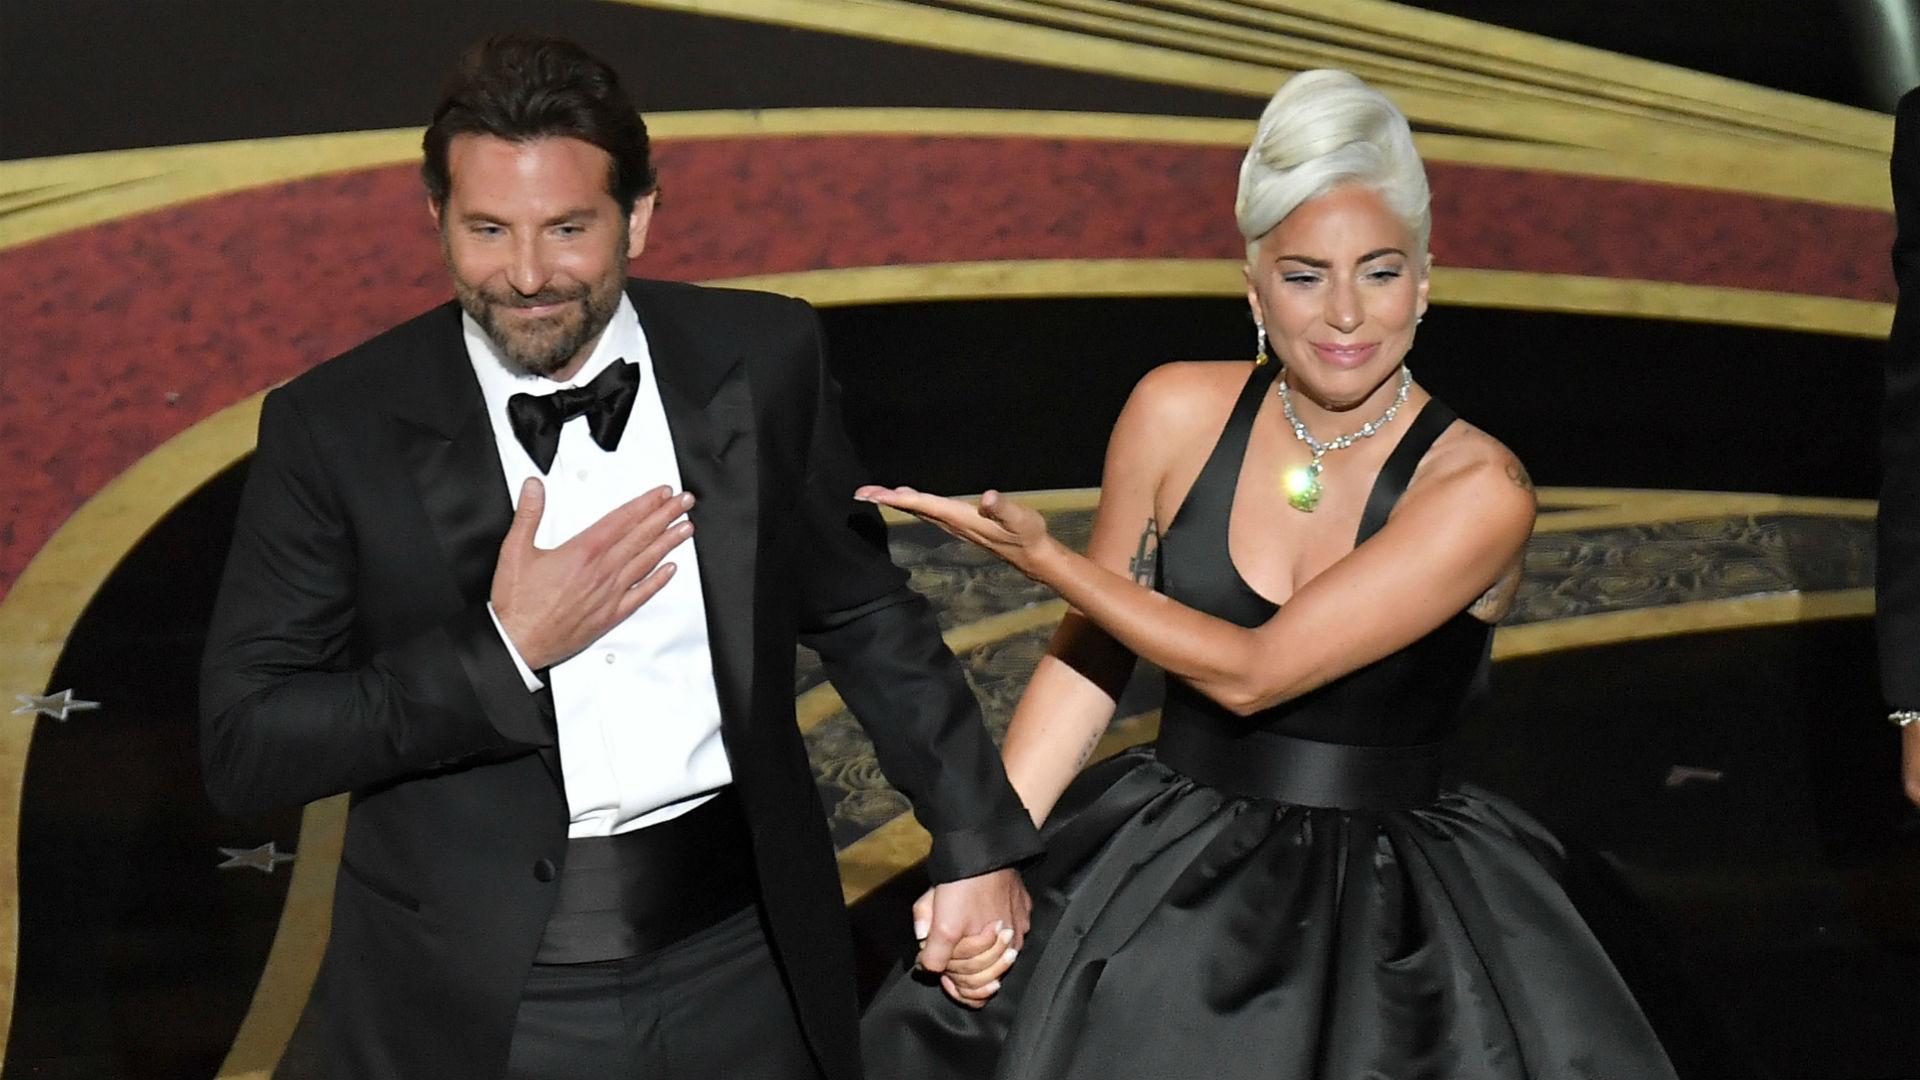 Lady Gaga Calls Bradley Cooper a 'True Friend' in New Instagram